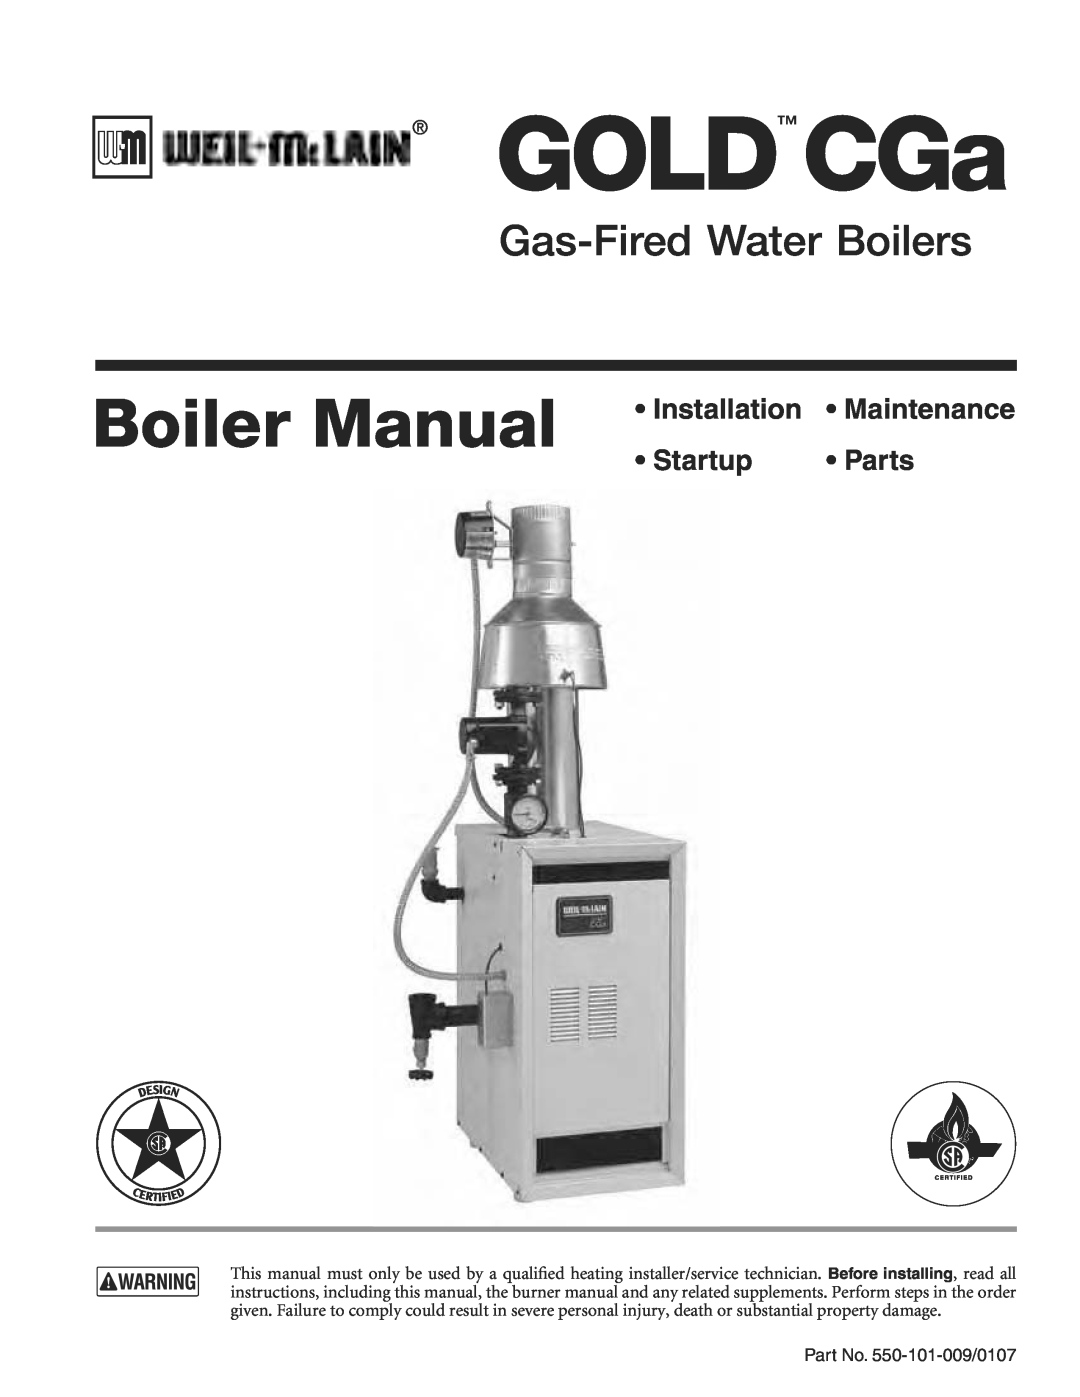 Weil-McLain CGA25SPDN manual GOLD CGa, Boiler Manual, Gas-FiredWater Boilers, ss3TARTUP ss0ARTS, Part No. 550-101-009/0107 